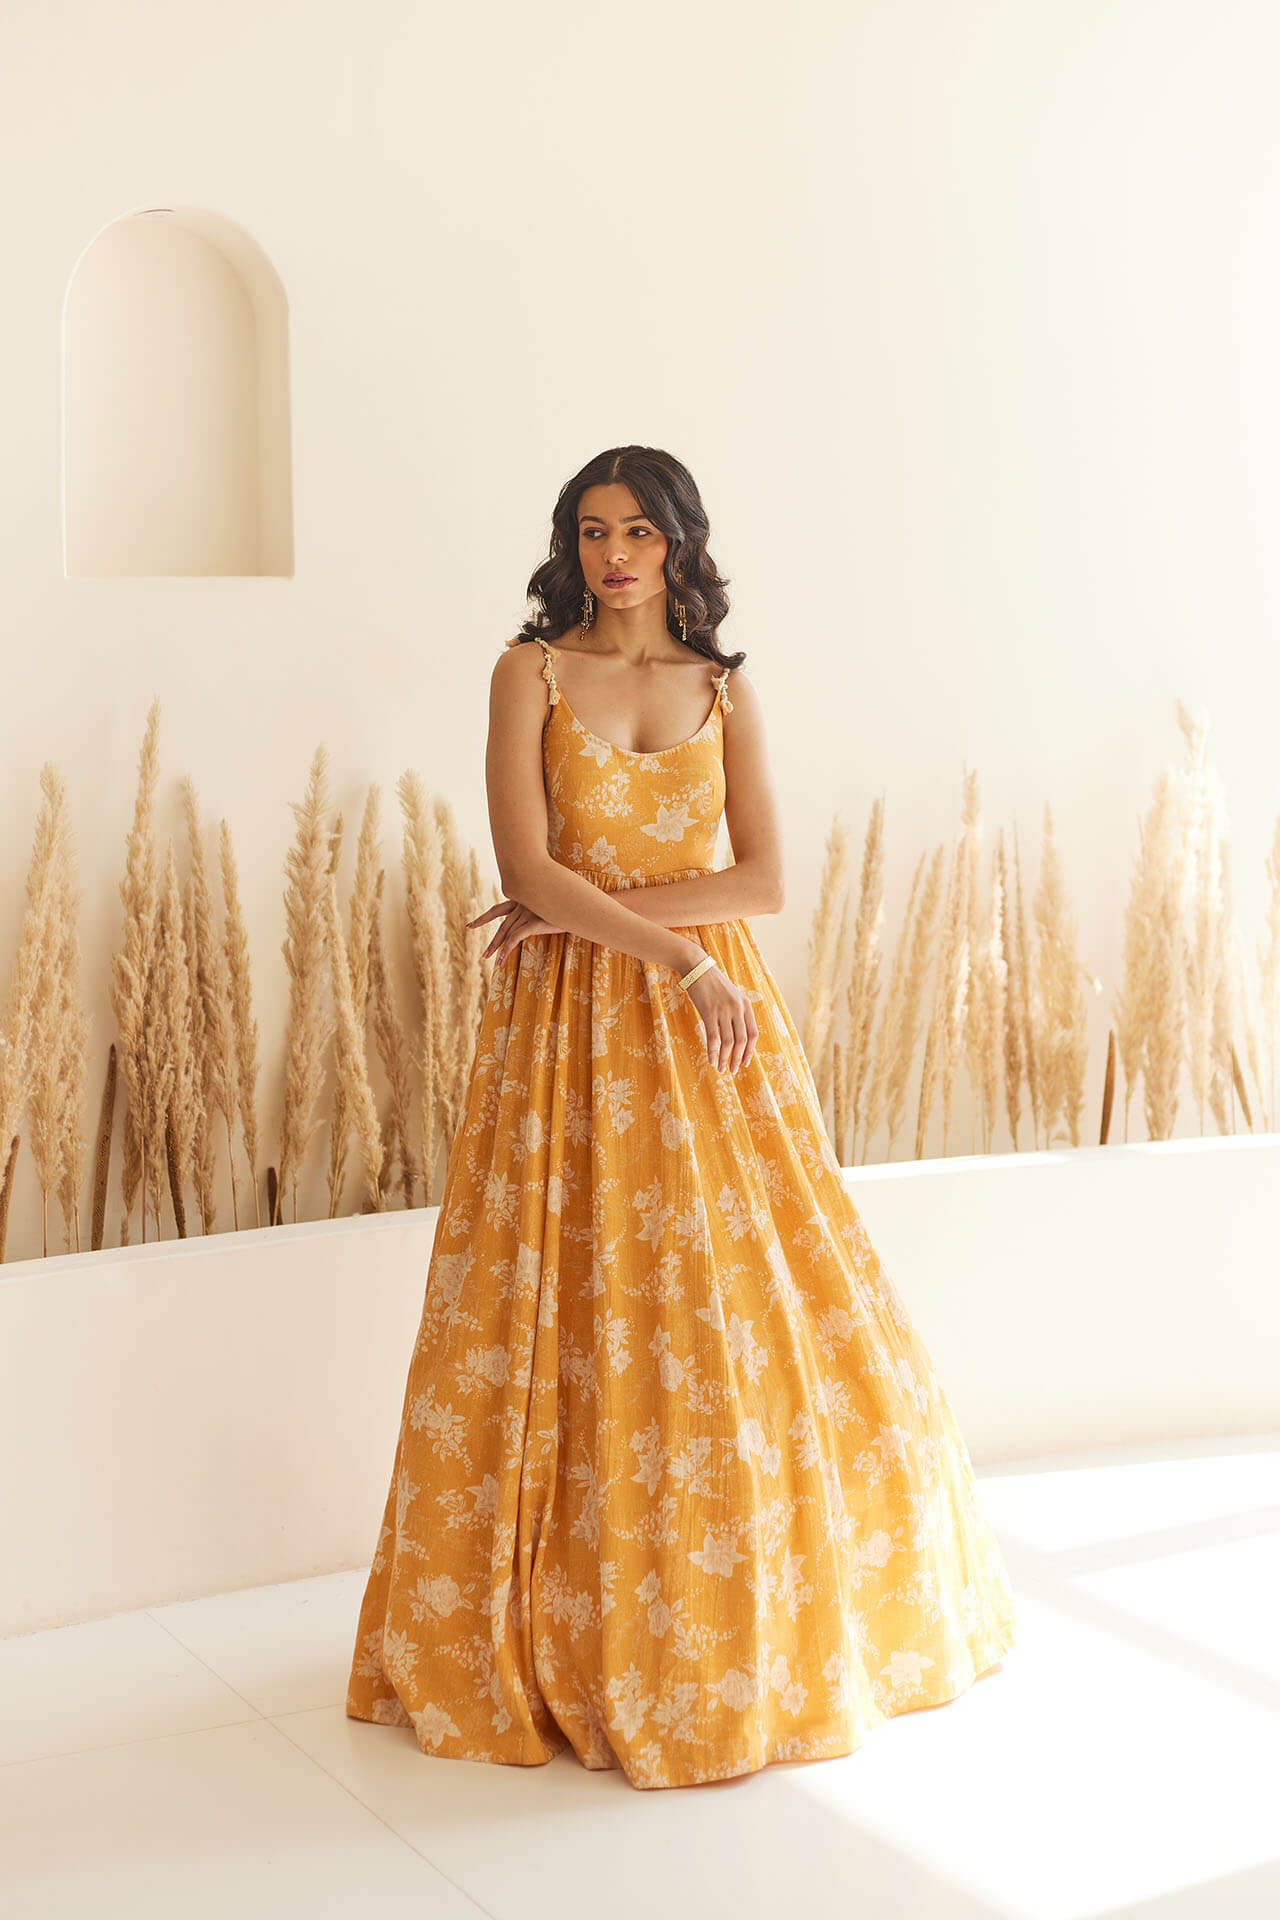 2019 Prom Dresses Yellow Dress | Yellow Prom Dress Straps | Prom Dress  Sleeve Yellow - Prom Dresses - Aliexpress